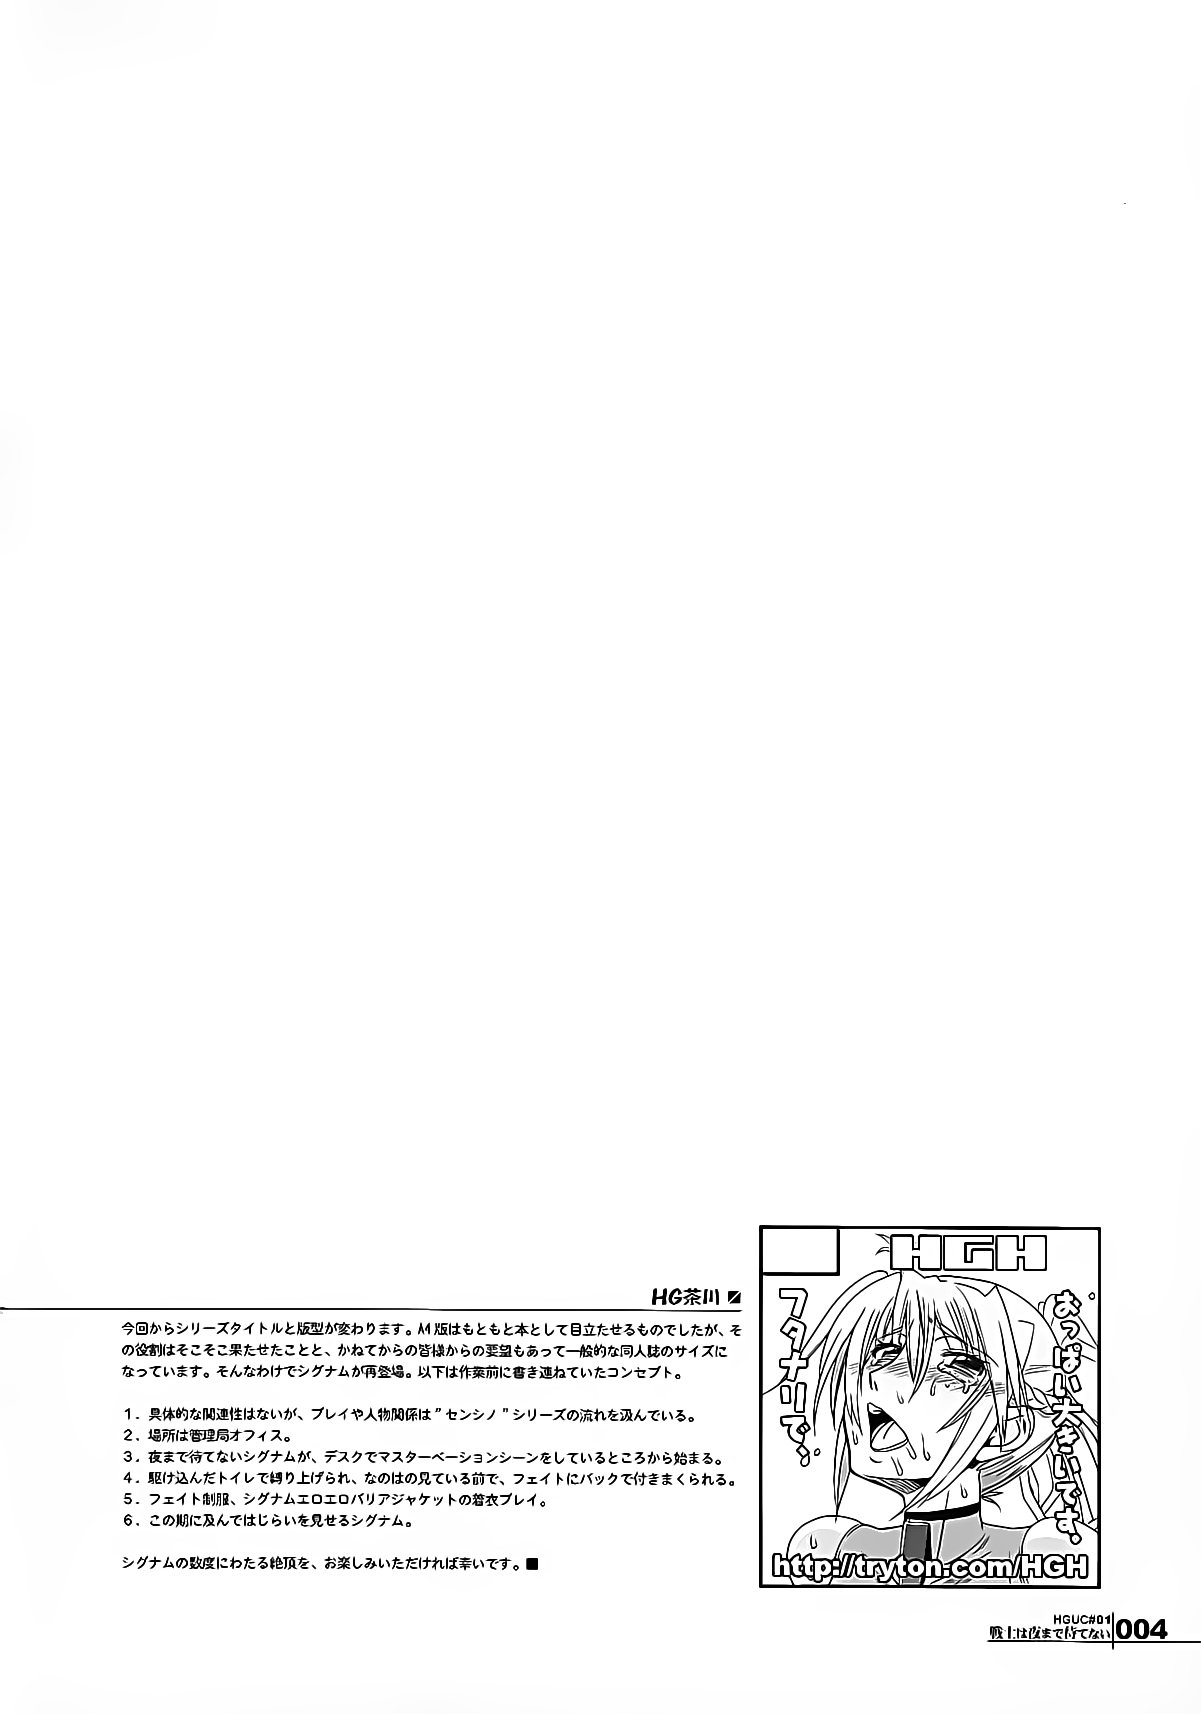 HGUC cap01 -Senshi ha Yoru Made Mate Nai- - 3